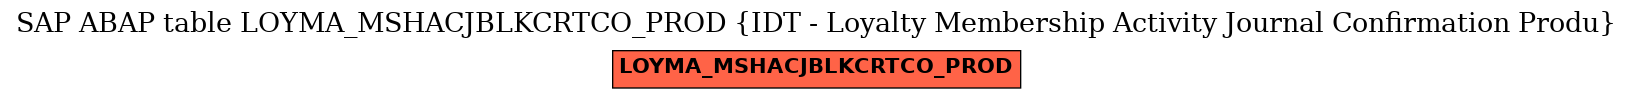 E-R Diagram for table LOYMA_MSHACJBLKCRTCO_PROD (IDT - Loyalty Membership Activity Journal Confirmation Produ)